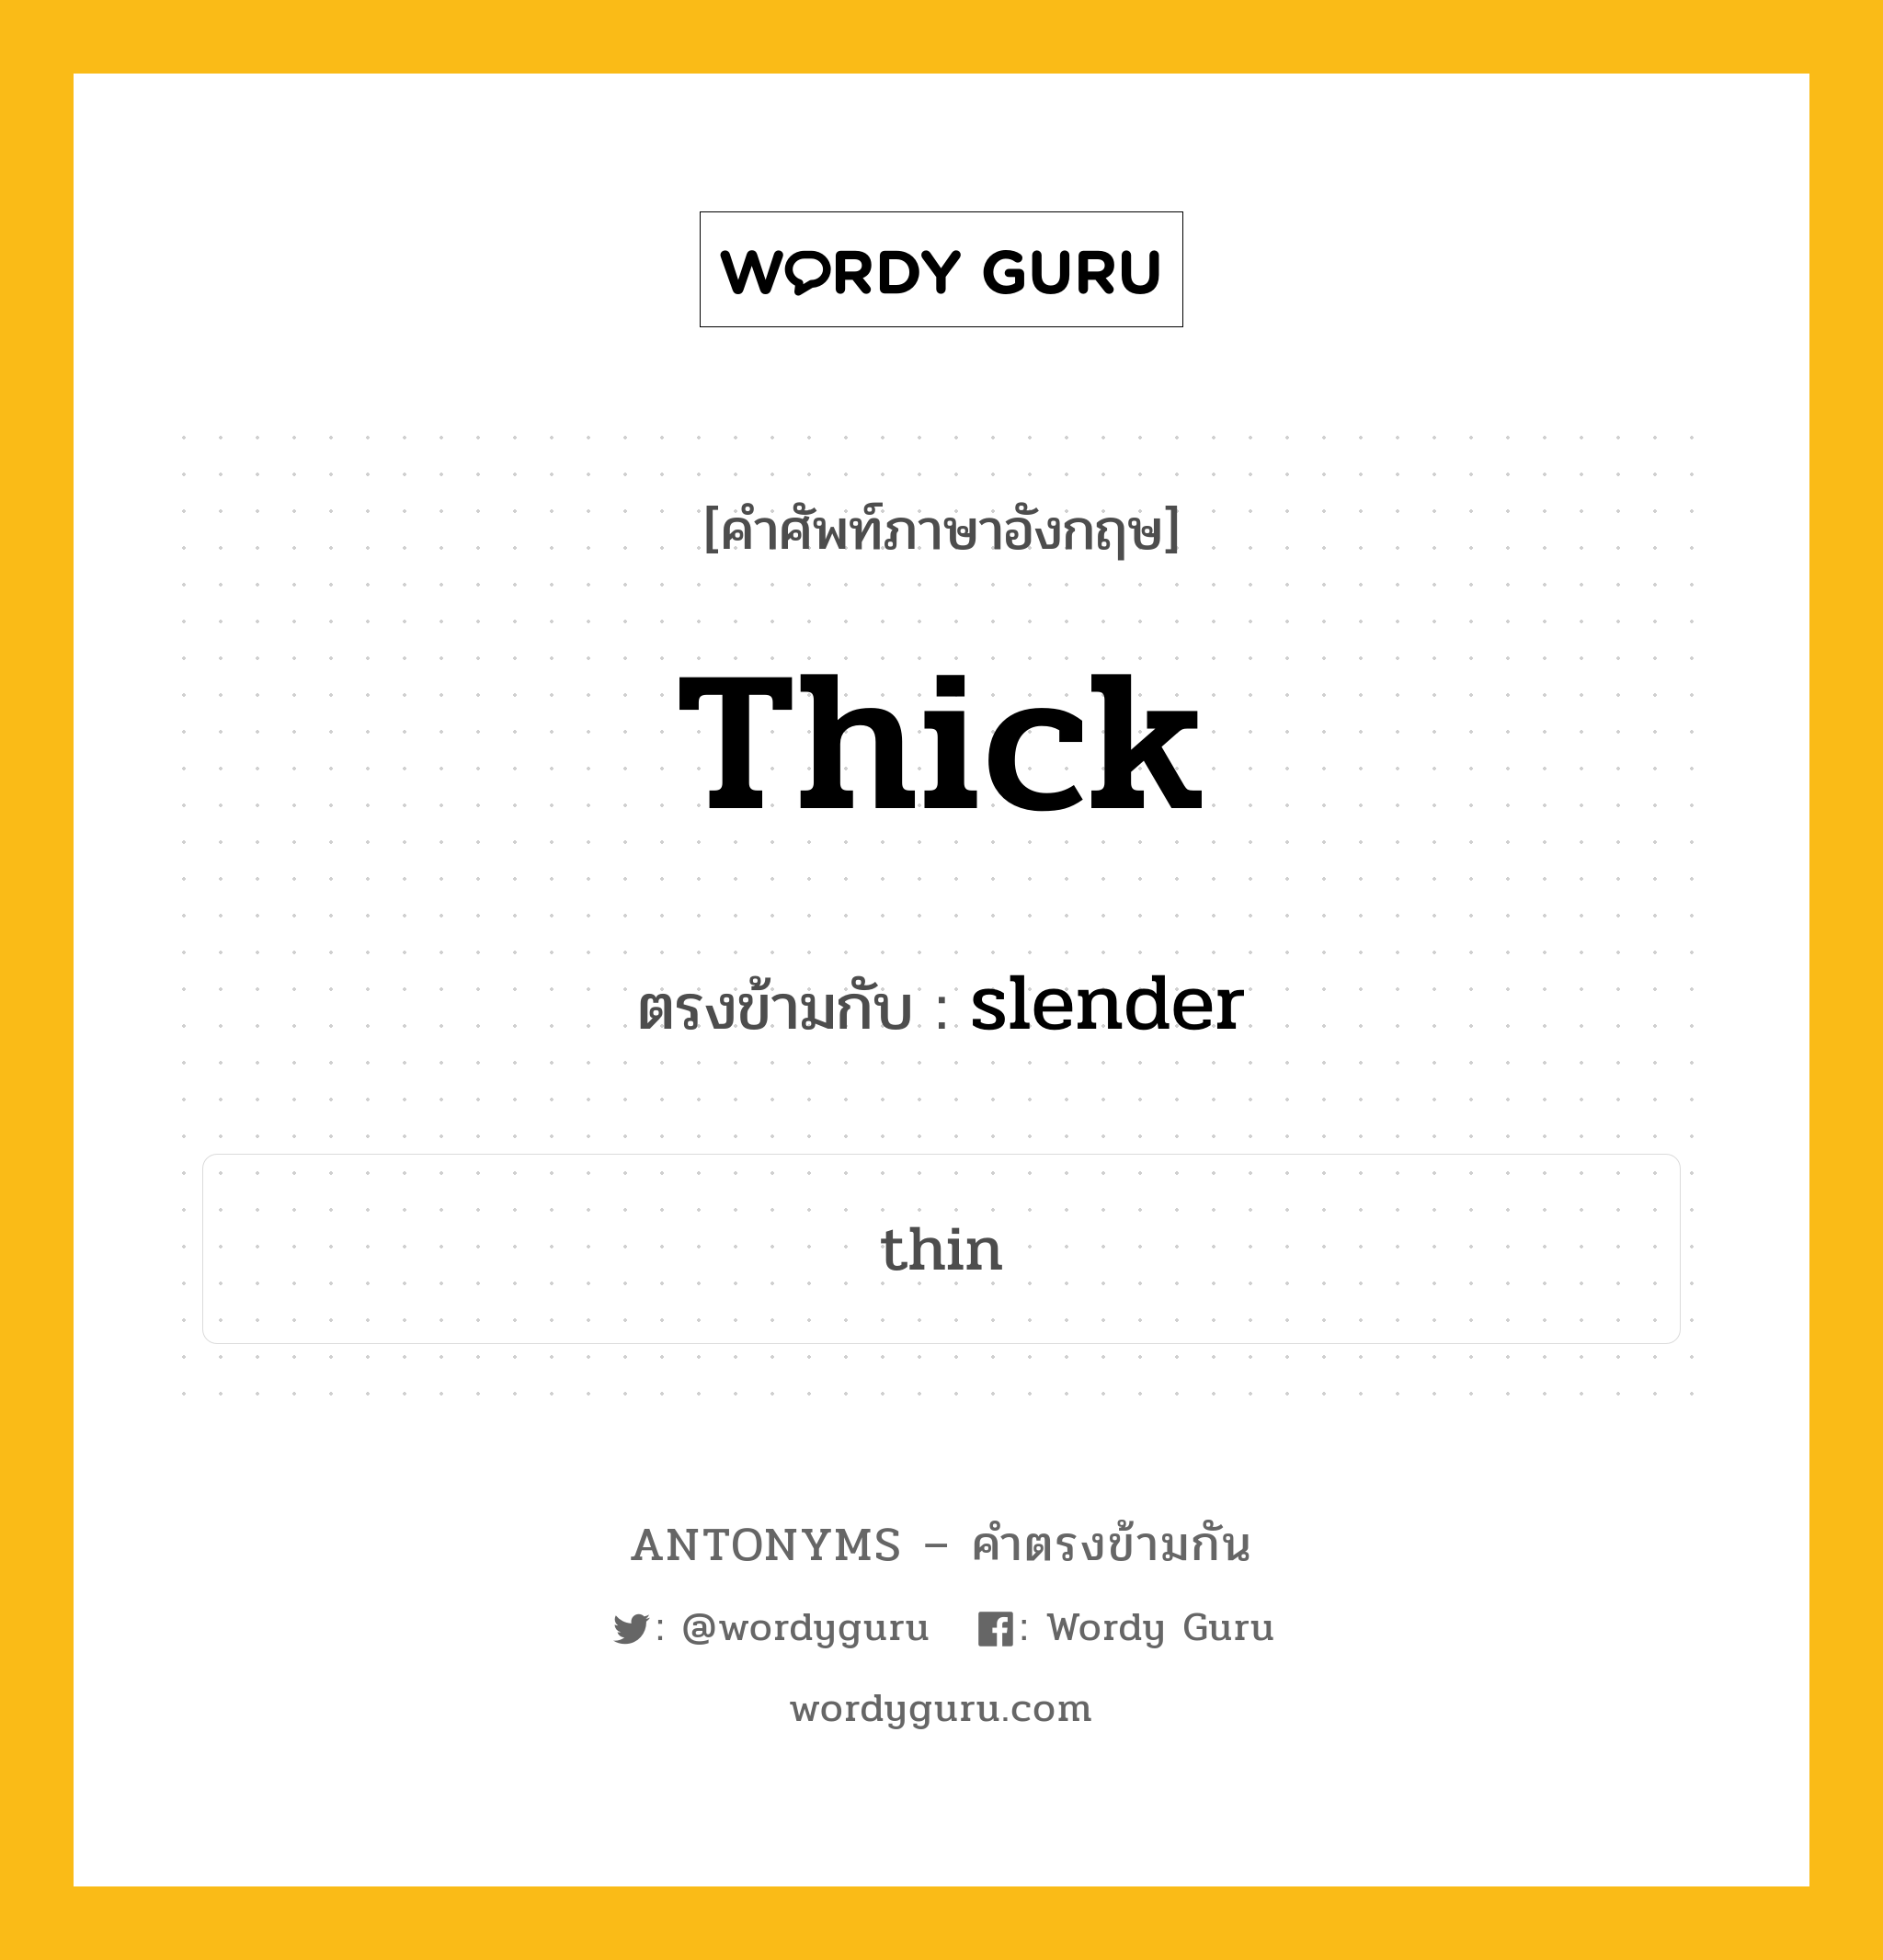 thick เป็นคำตรงข้ามกับคำไหนบ้าง?, คำศัพท์ภาษาอังกฤษ thick ตรงข้ามกับ slender หมวด slender